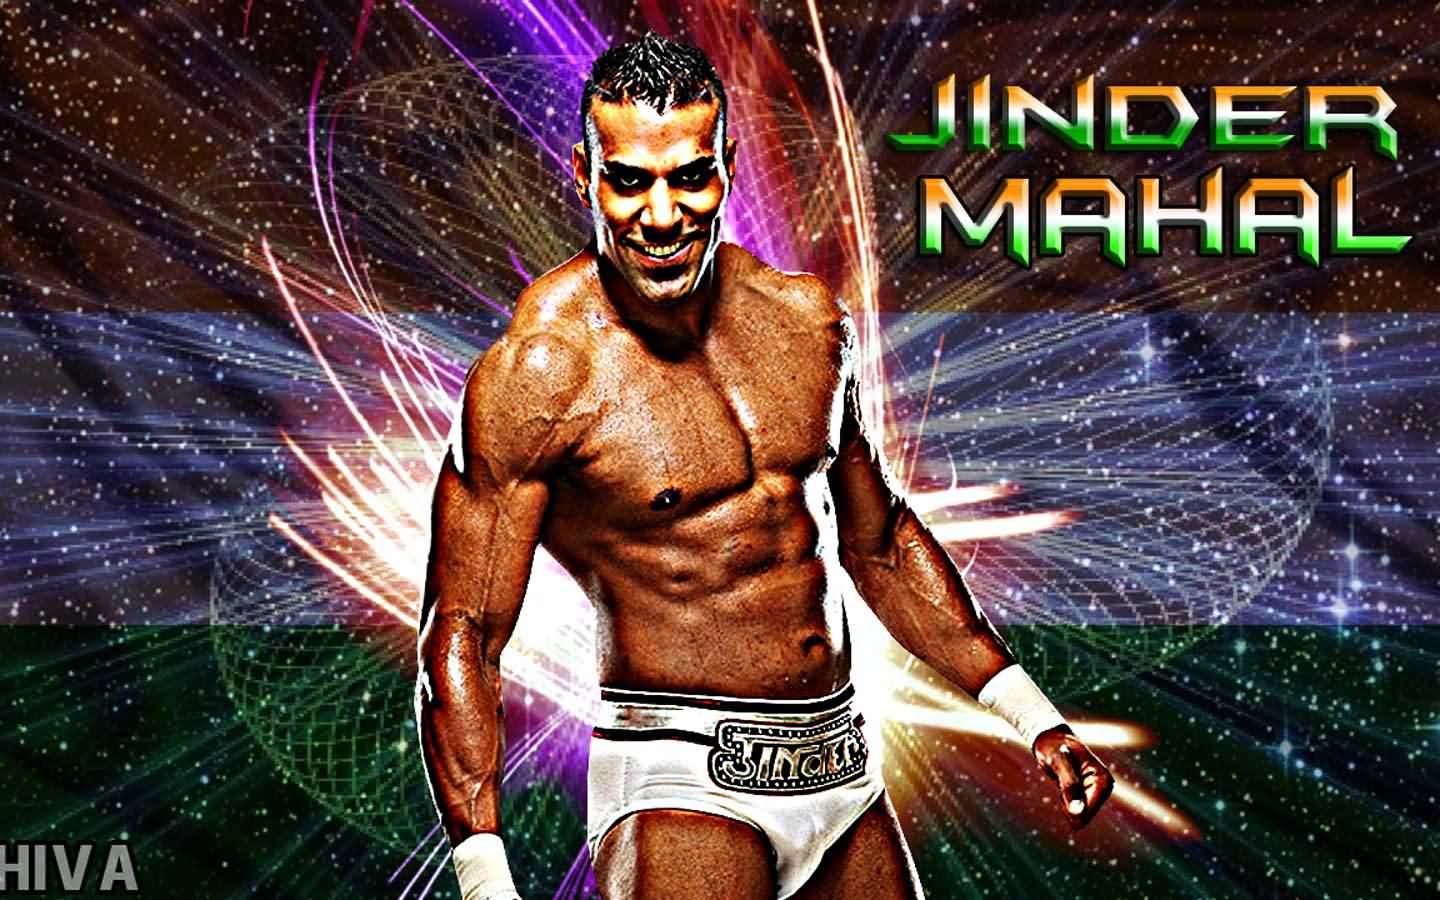 Jinder Mahal Archives Superstars, WWE Wallpaper, WWE PPV's